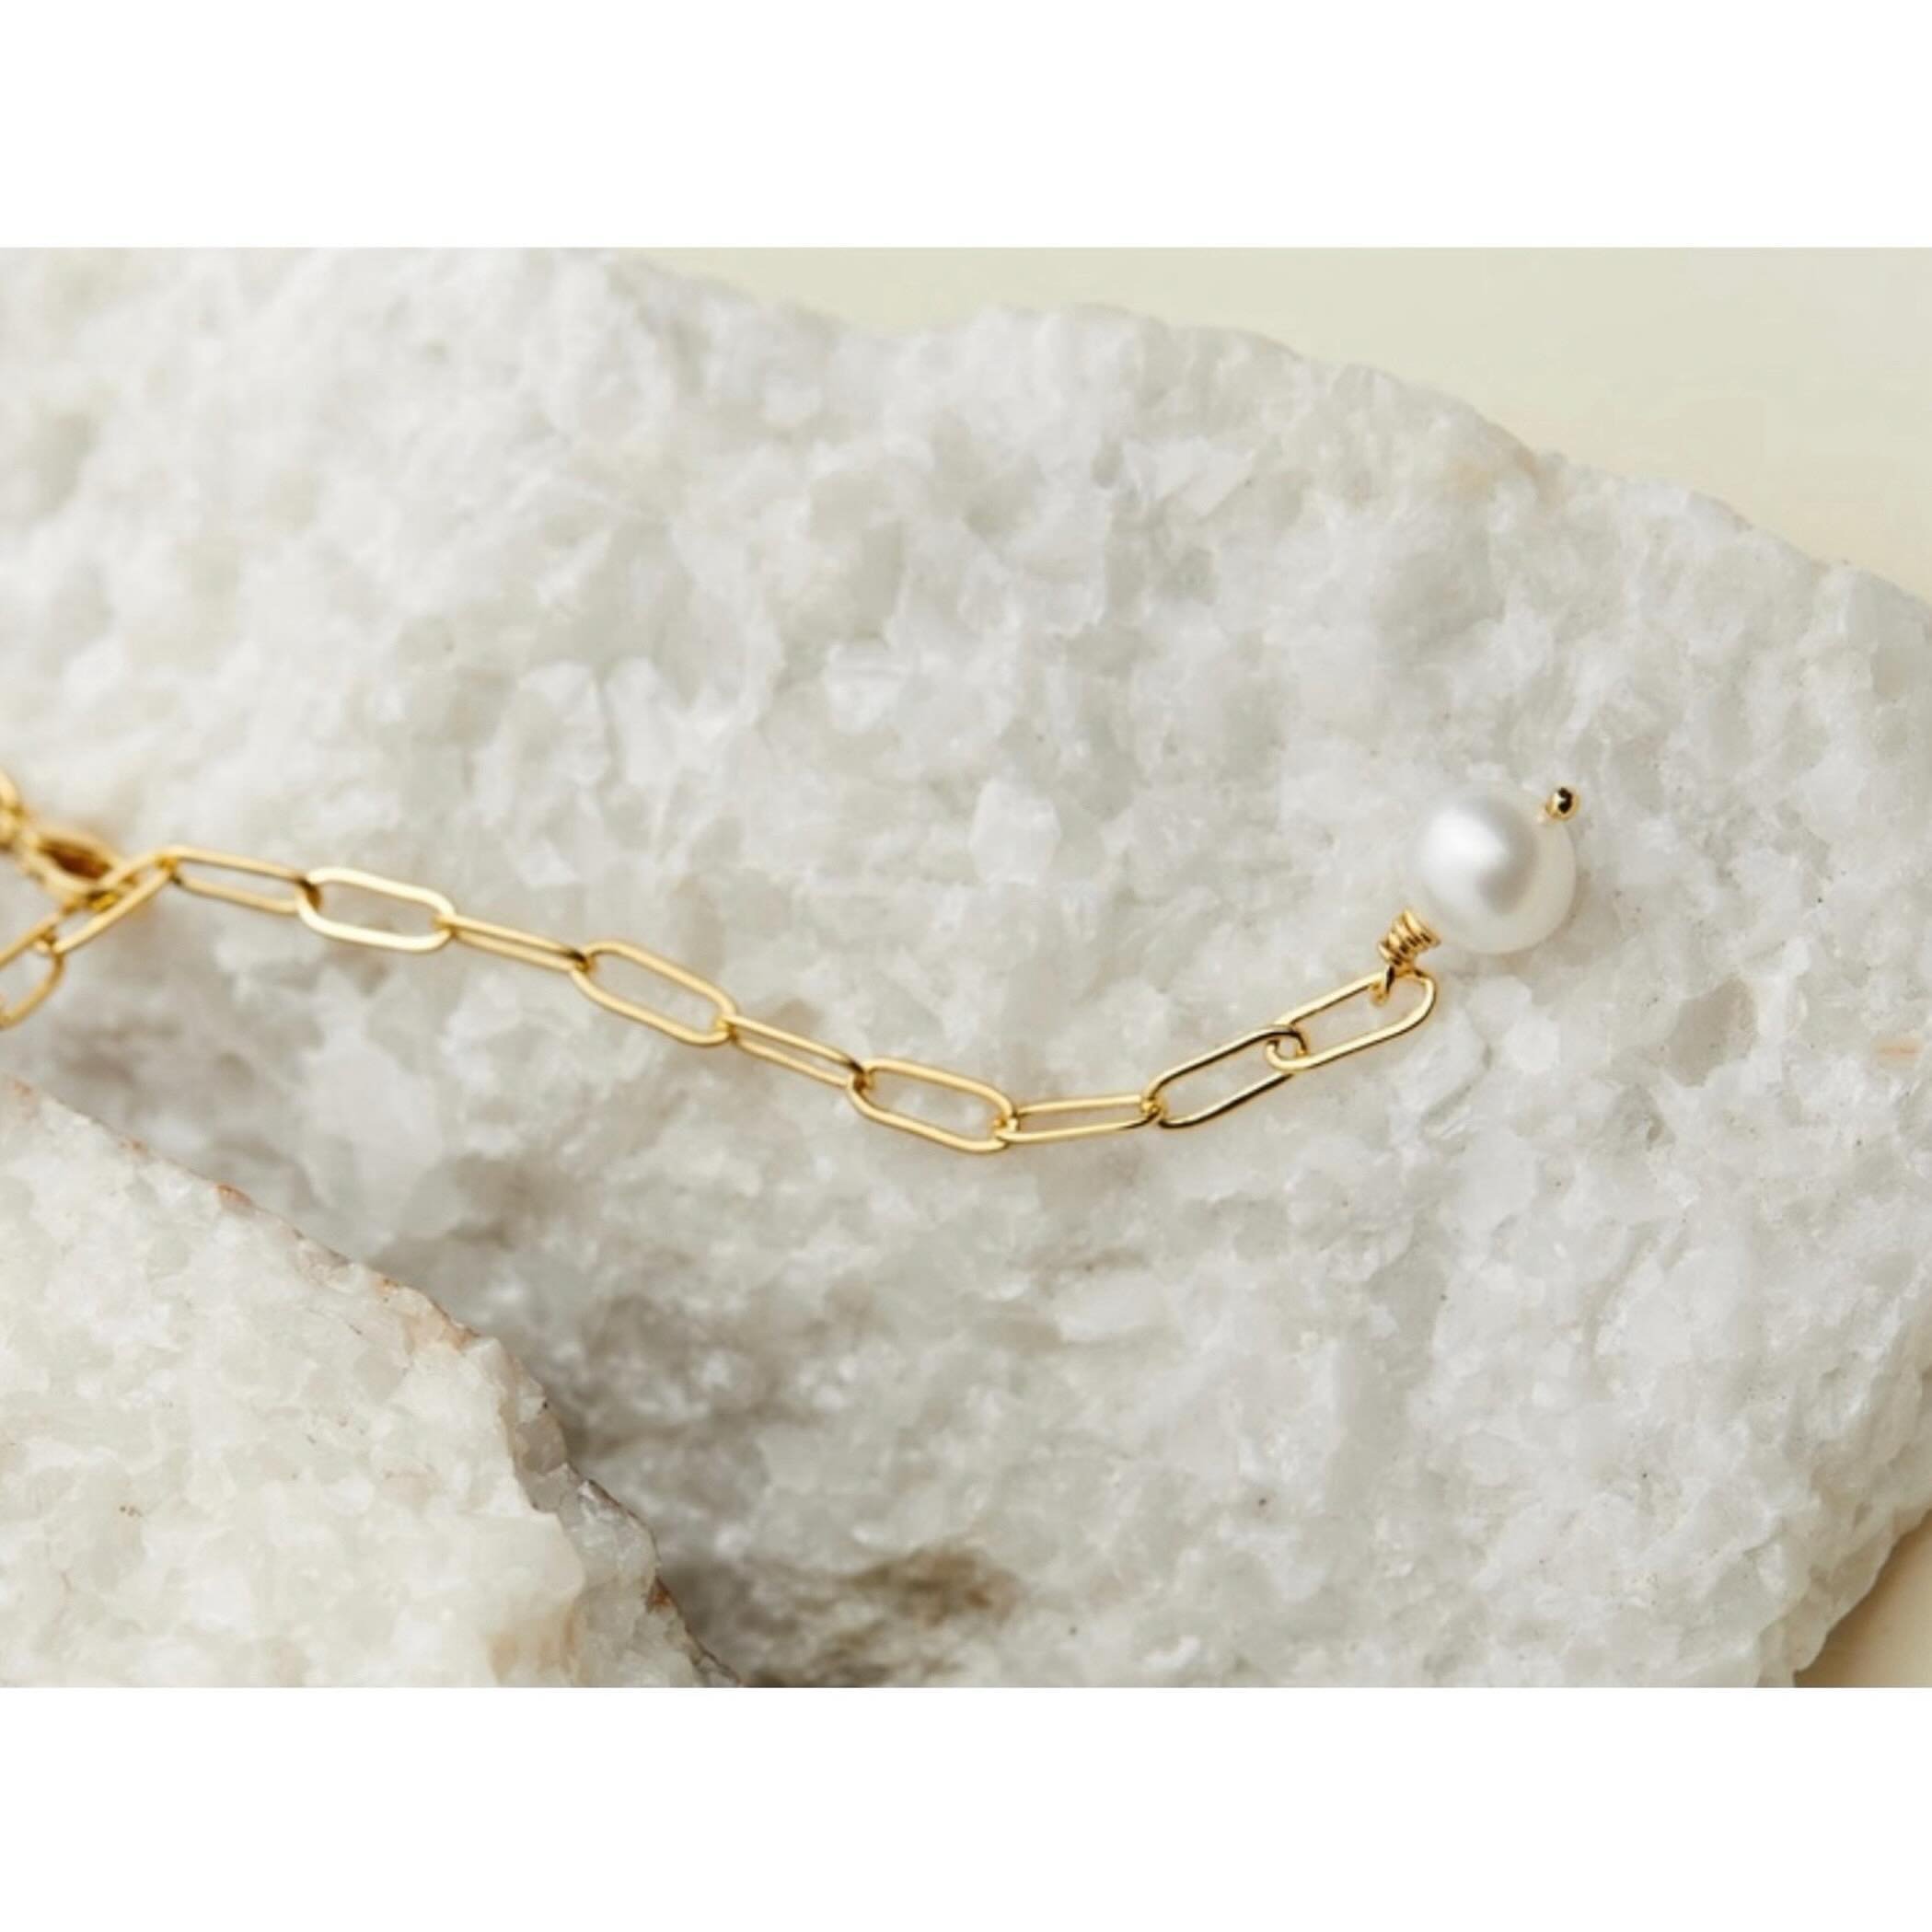 L O T U S - Our delicate Lotus necklace by @ambersceats, the perfect marriage of pearl and gold.⠀⠀ ⠀
⠀⠀ ⠀
#whitebygreen #brudesalong #brudekjole #brudekjoleoslo #brud #bryllup #smykker #bride #bridal #modernbride #weddingdress #weddinginspiration #br